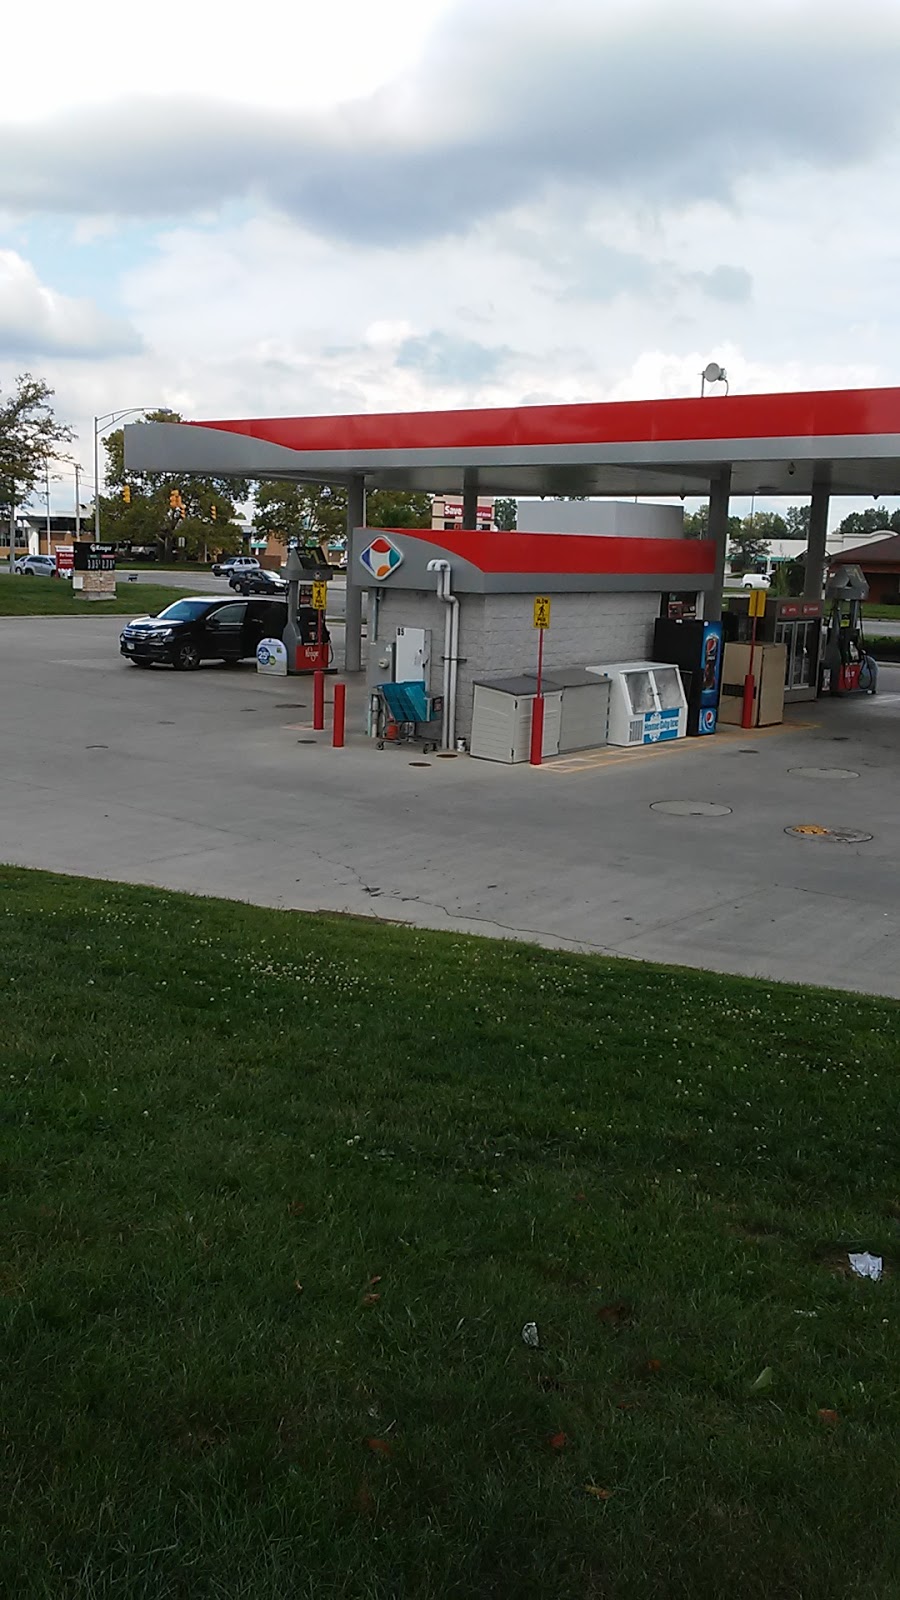 Kroger Fuel Center | 85 N Wilson Rd, Columbus, OH 43228 | Phone: (614) 274-8135